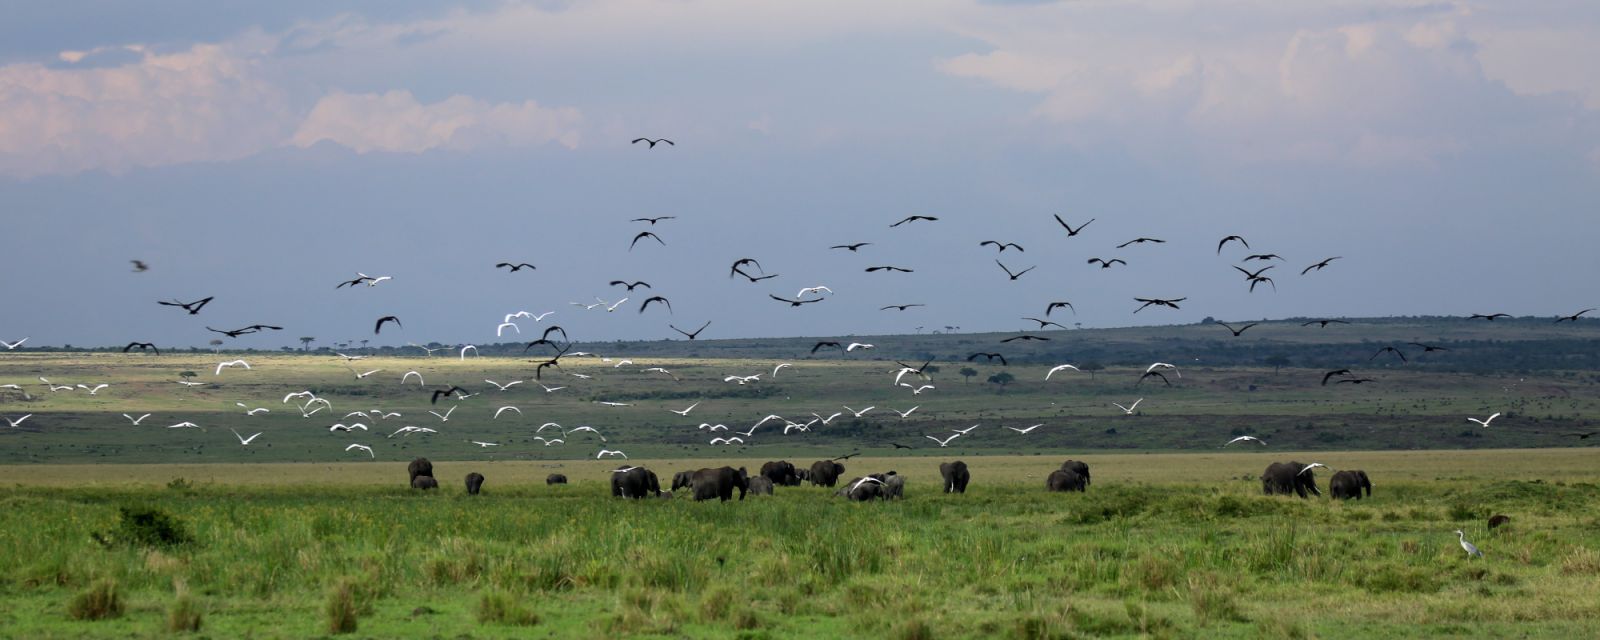 Kenya’s great wilderness – the magical Masai Mara